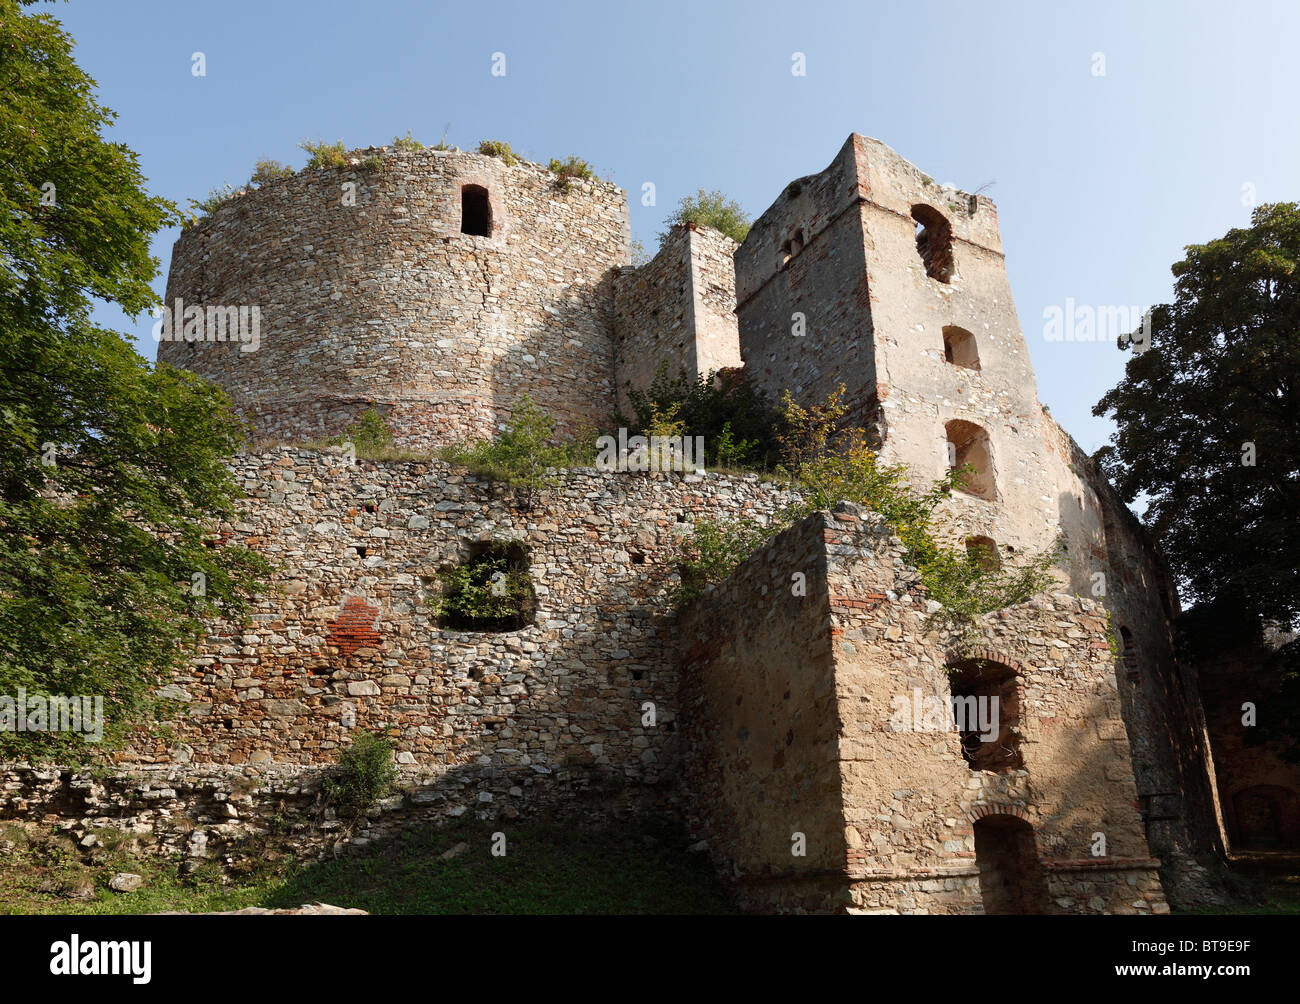 Burgruine Landsee castle ruins, Burgenland, Austria, Europe Stock Photo